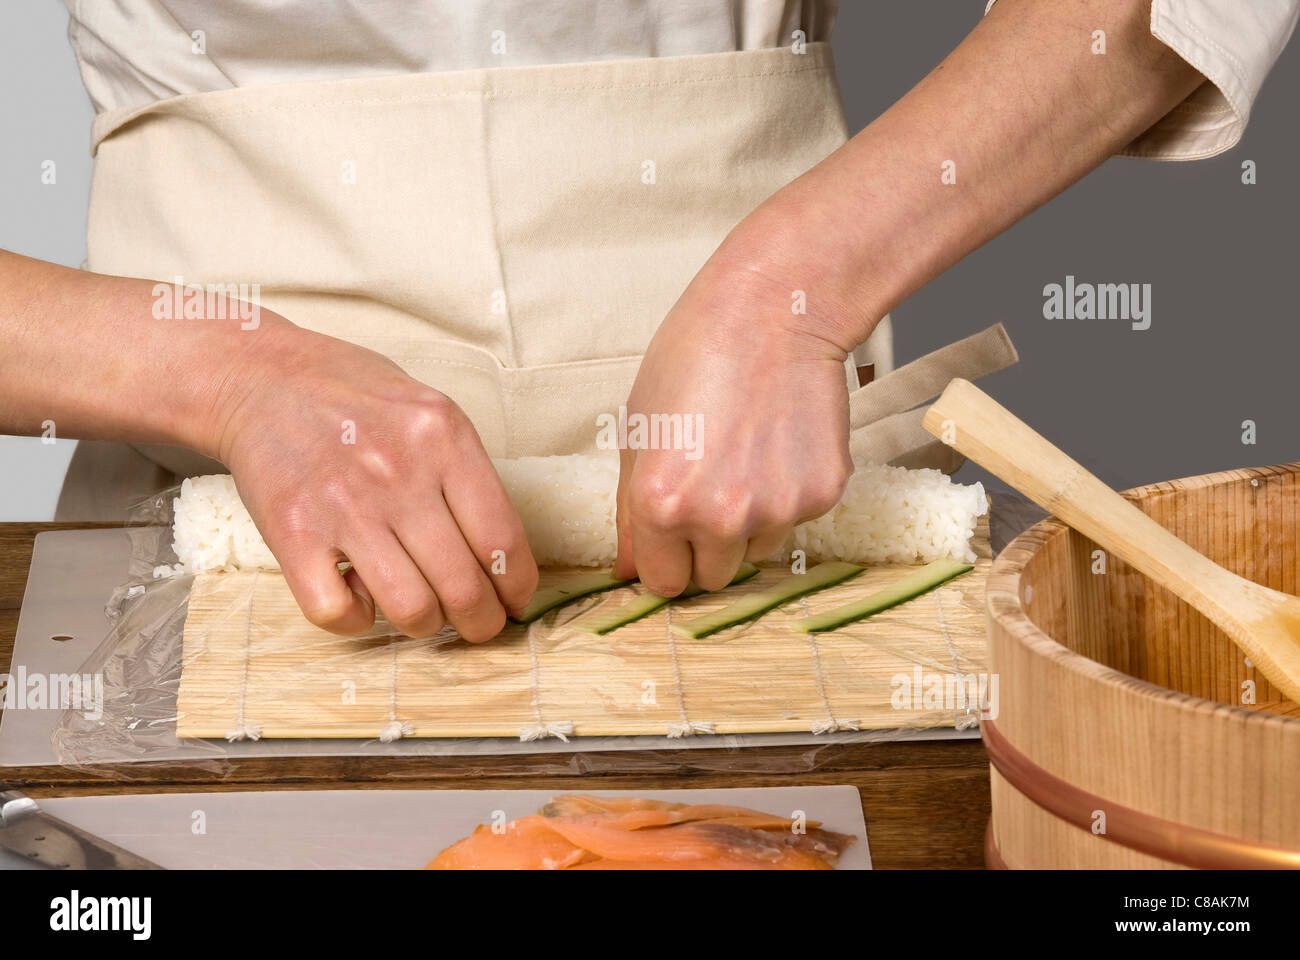 Cook preparing makis Stock Photo